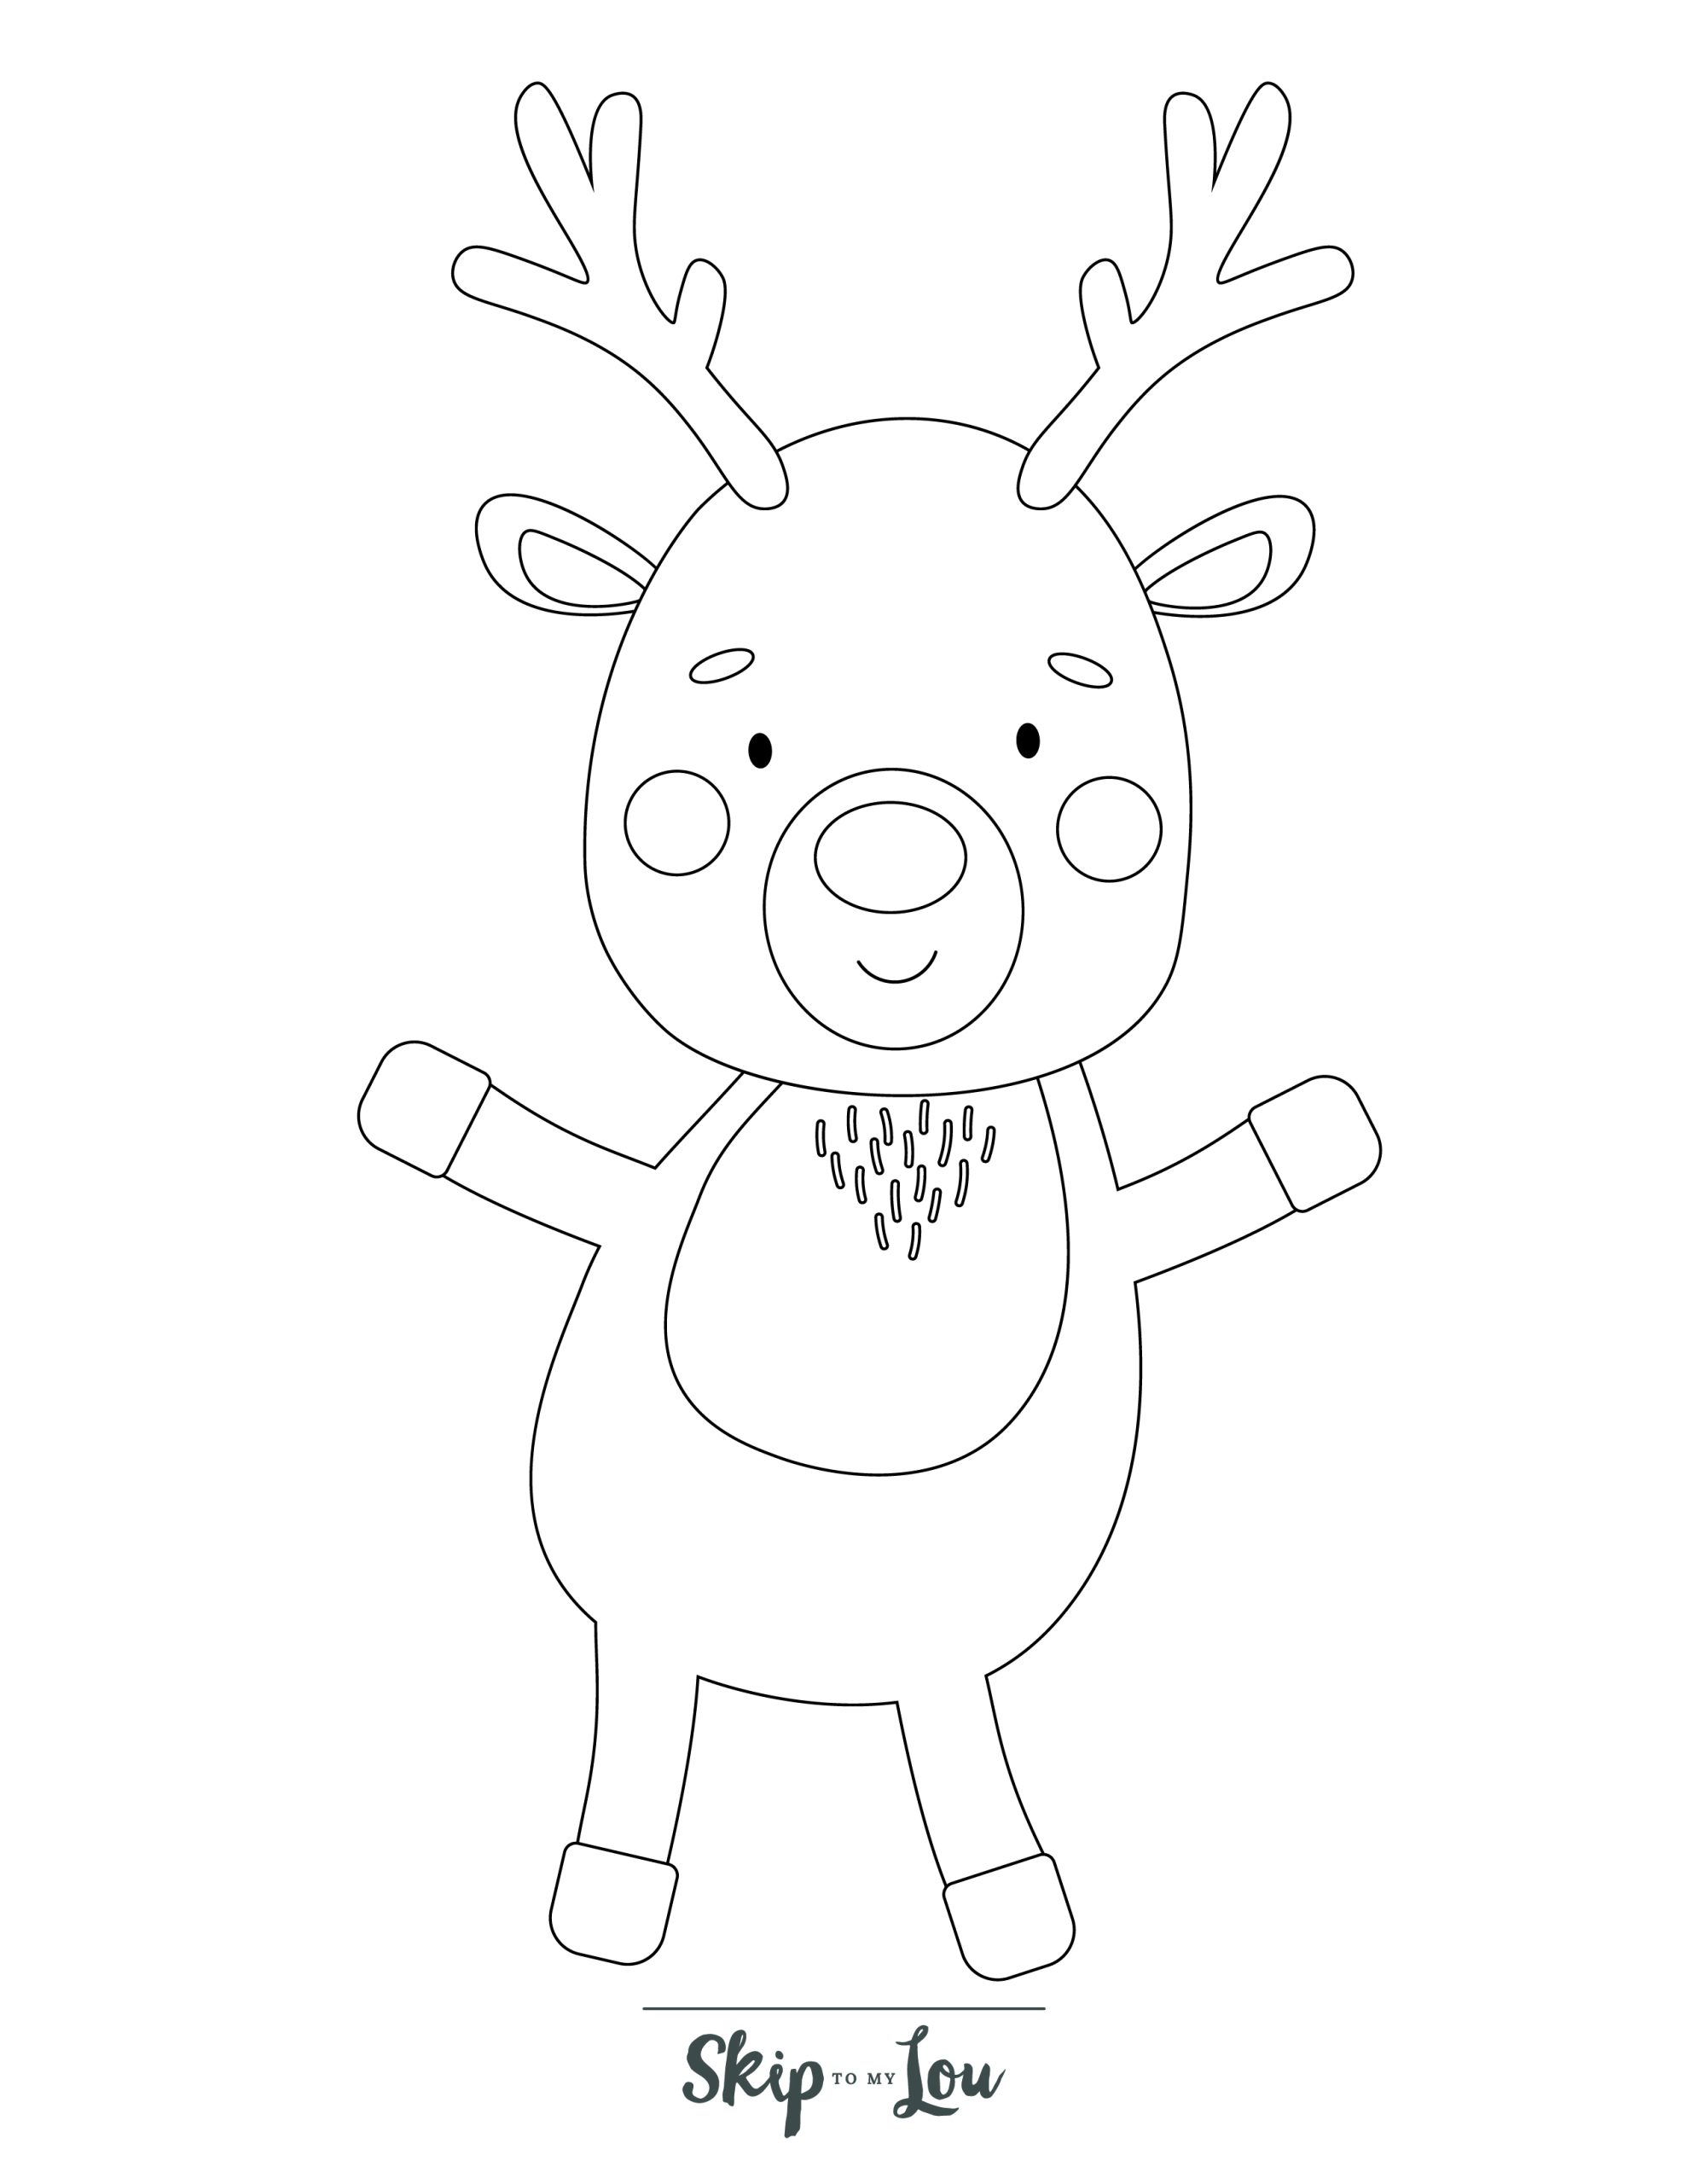 Reindeer Coloring Page 3 - Line drawing of happy reindeer standing up